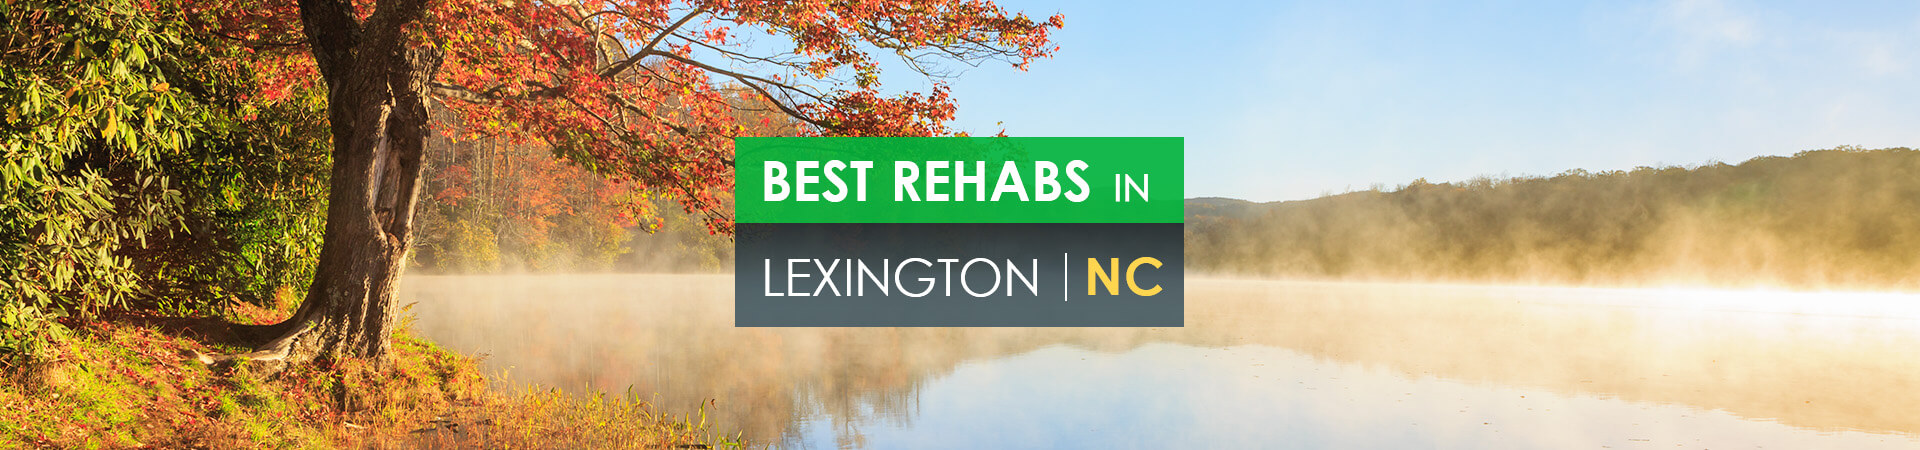 Best rehabs in Lexington, NC